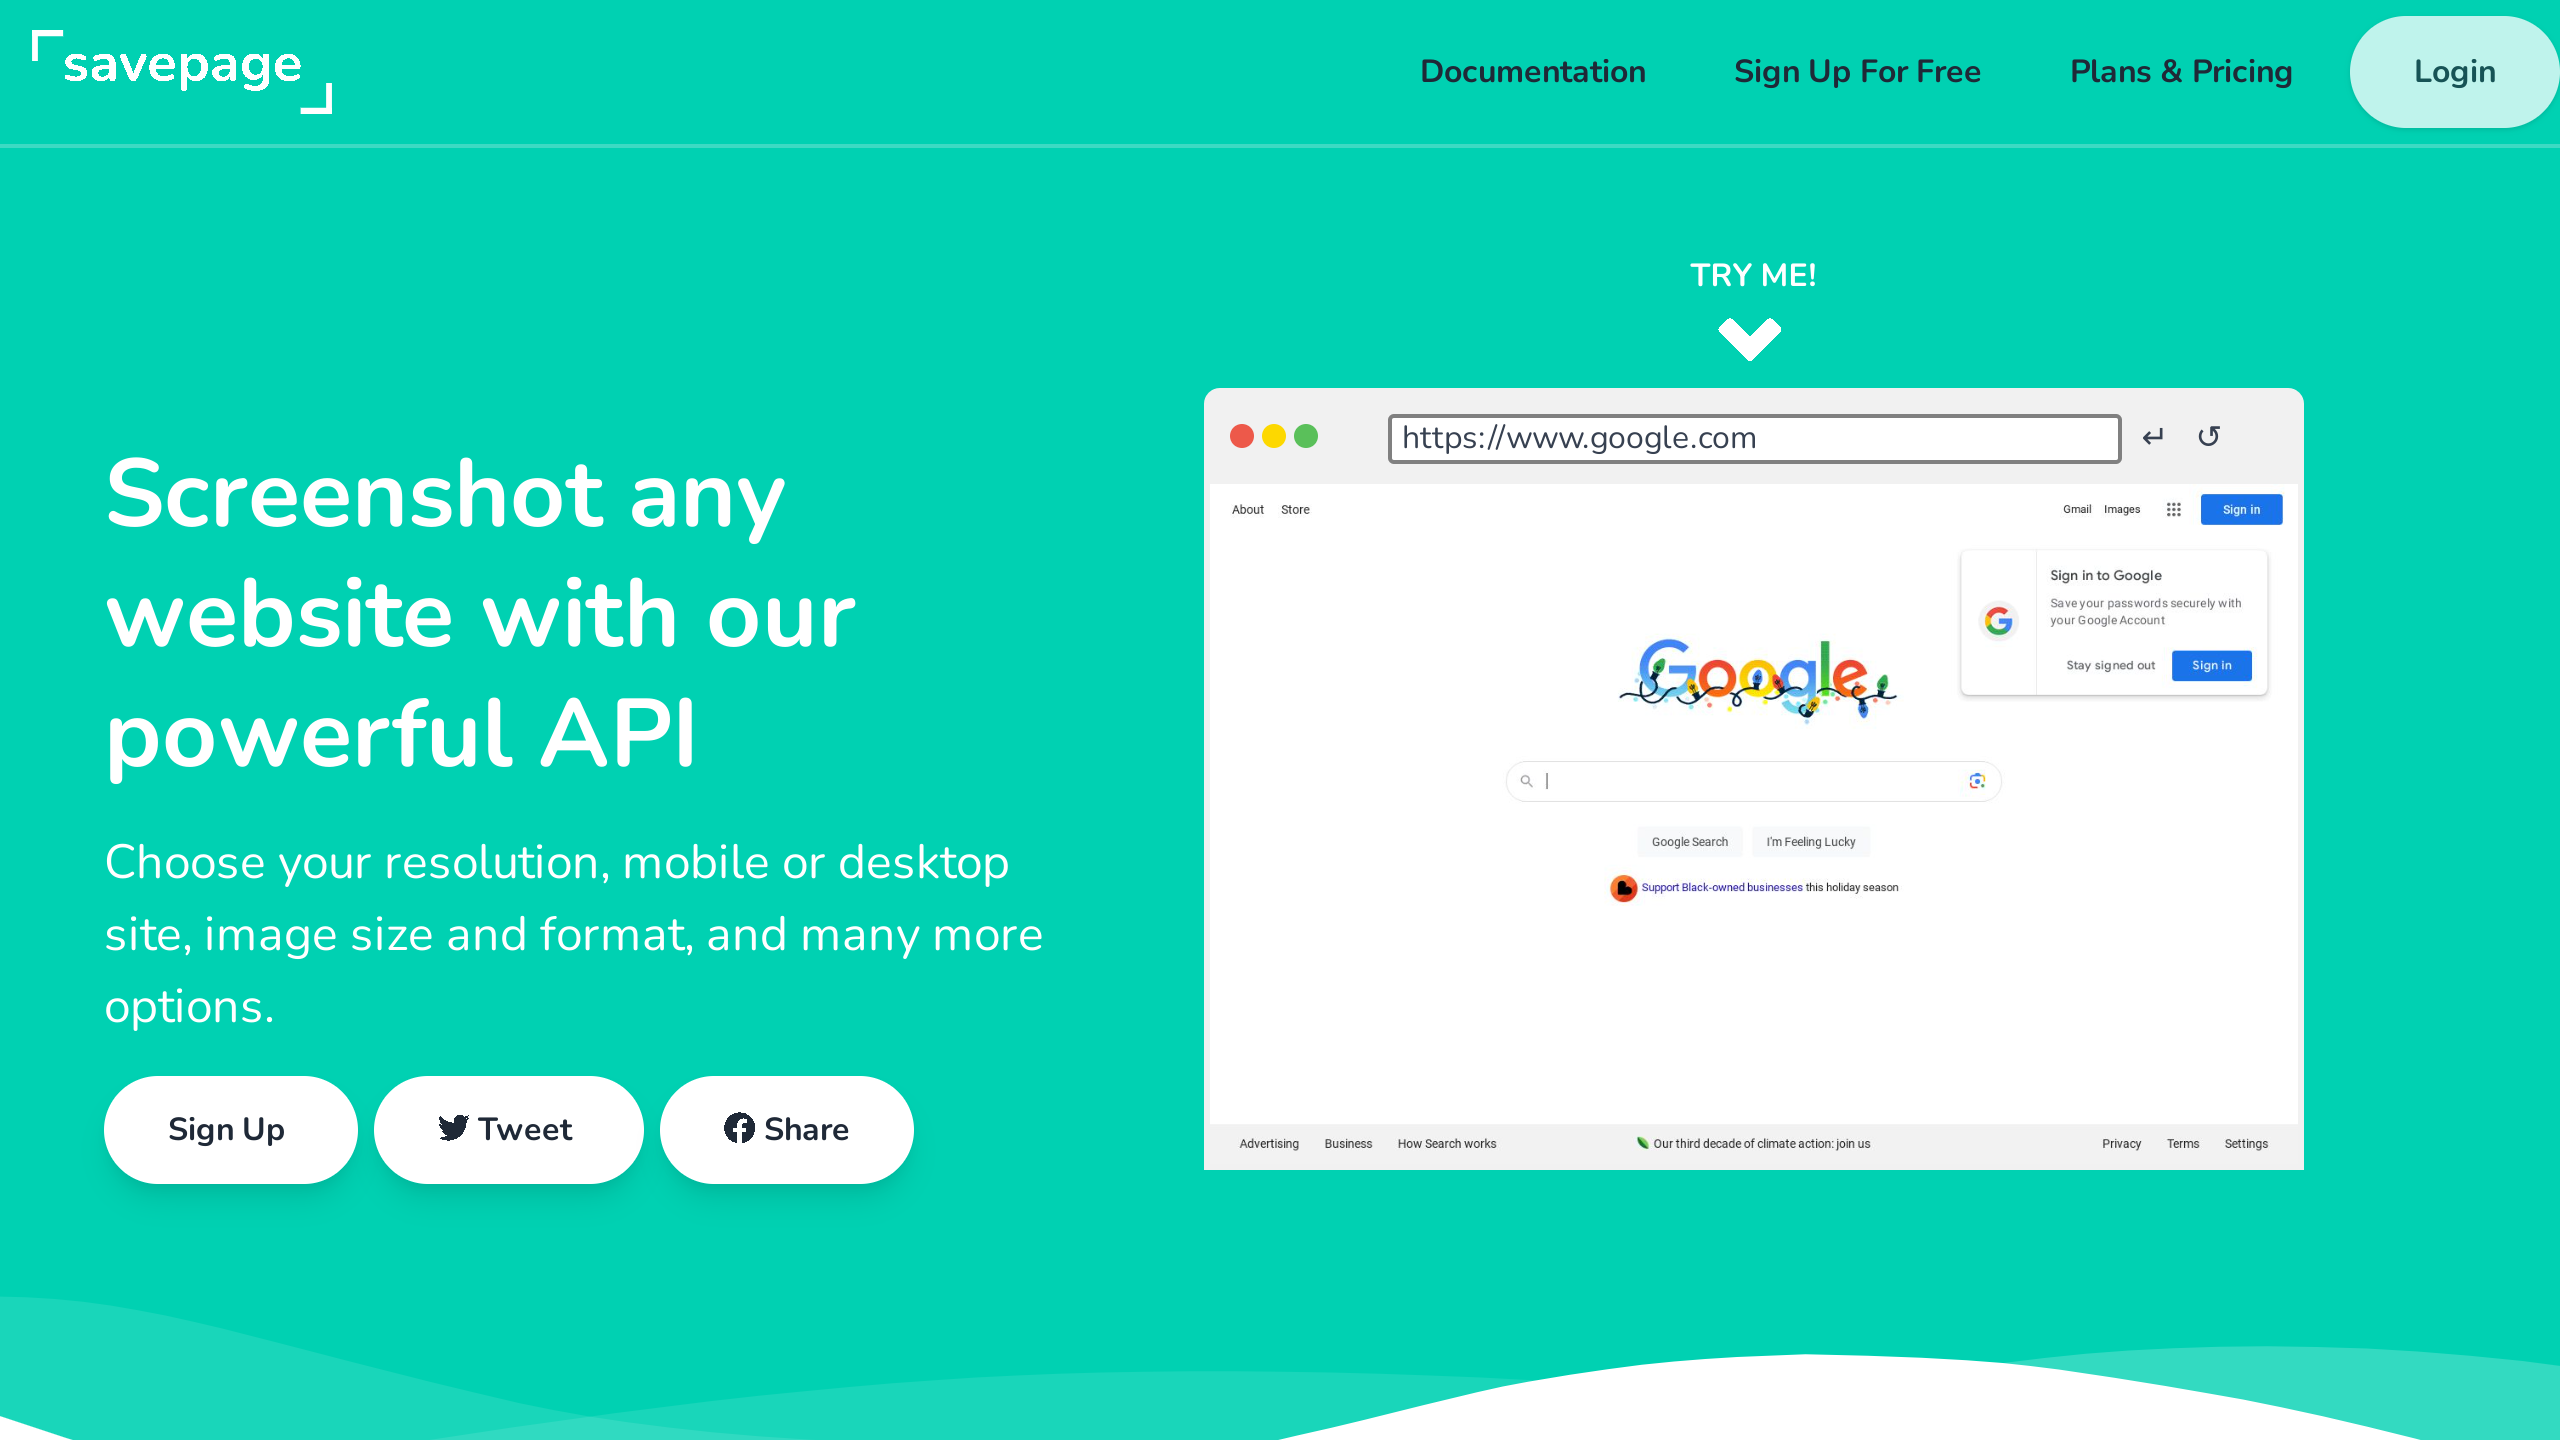 SavePage.io's website screenshot